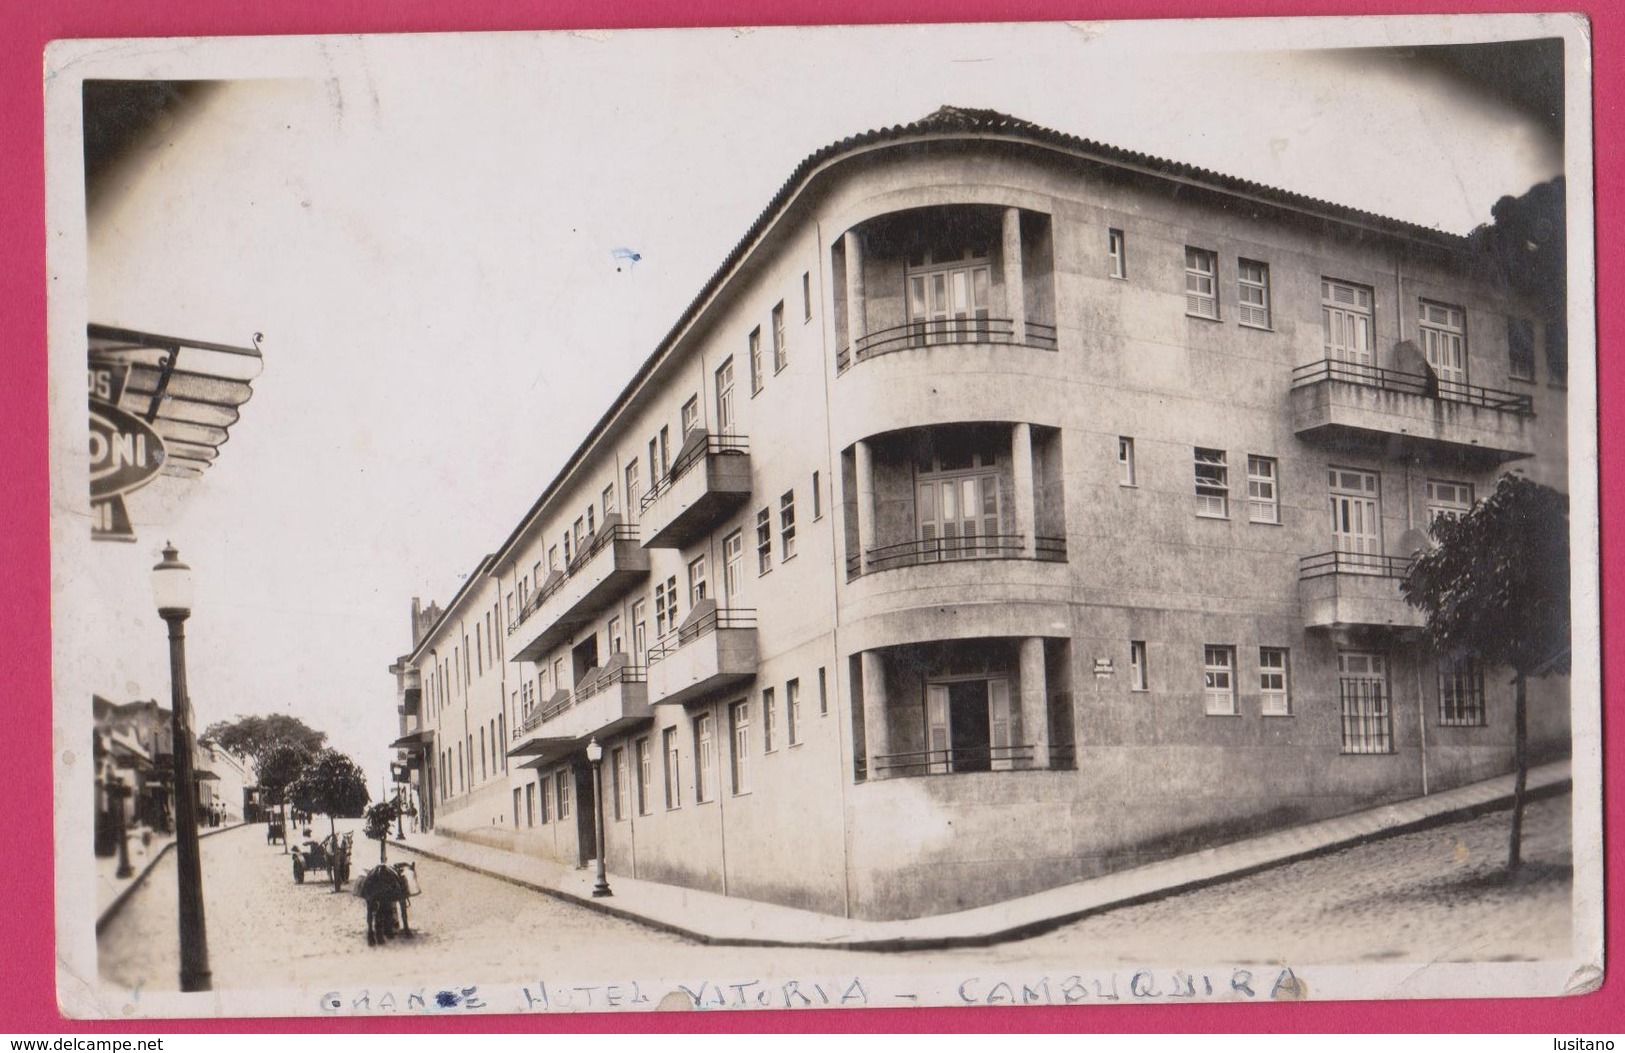 Cambuquira, Grande Hotel , Minas Gerais,  Real Photo Postcard 1950s Brasil - Belo Horizonte